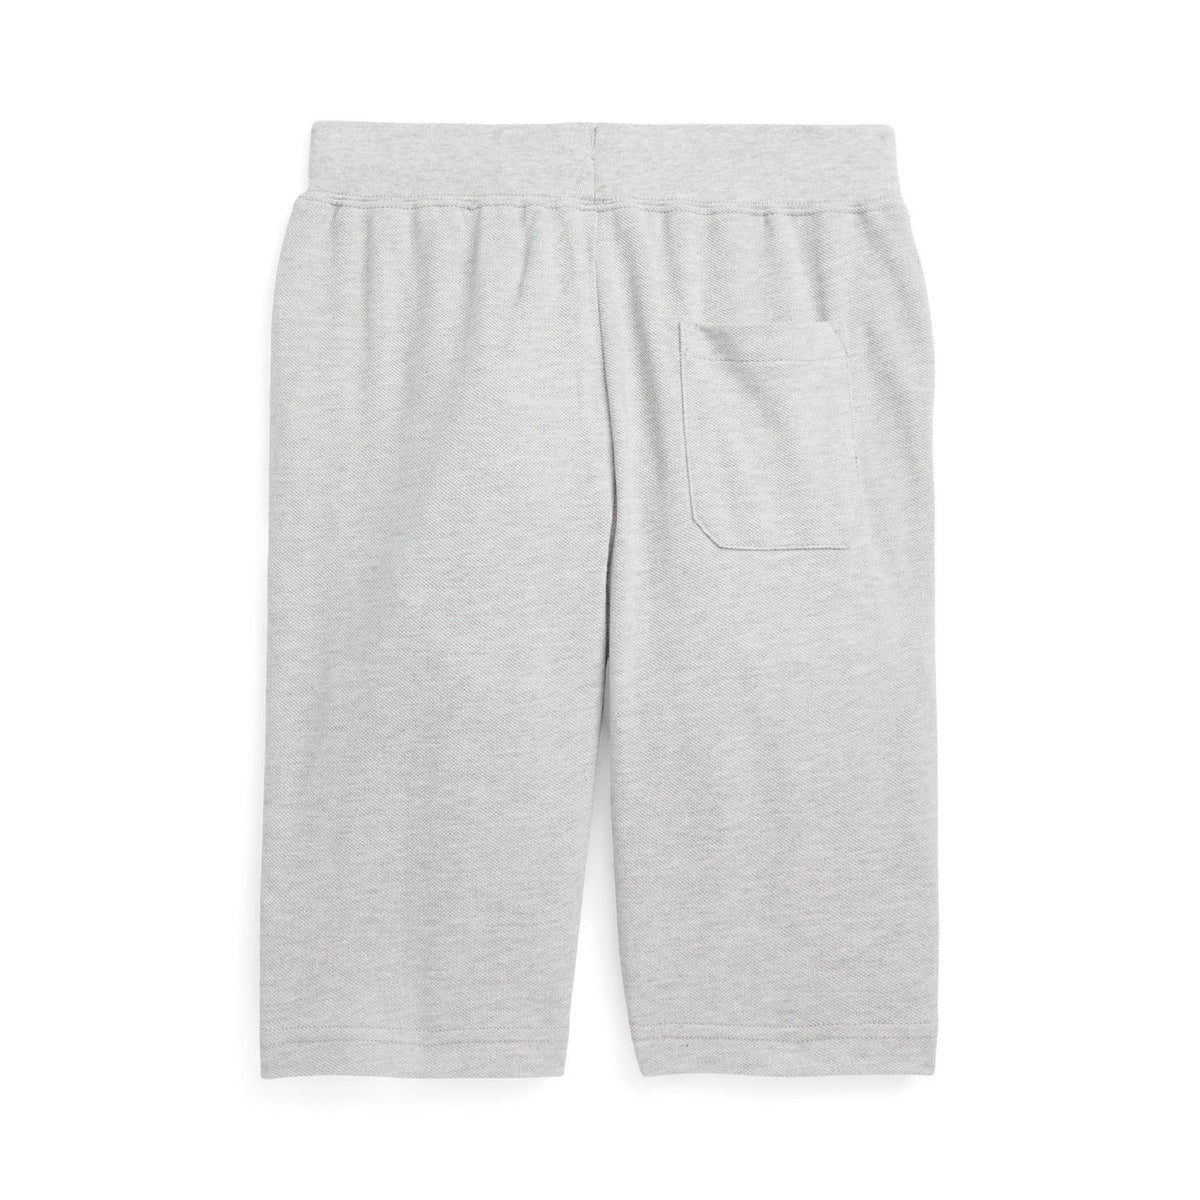 Shorts Cotton Mesh Grey